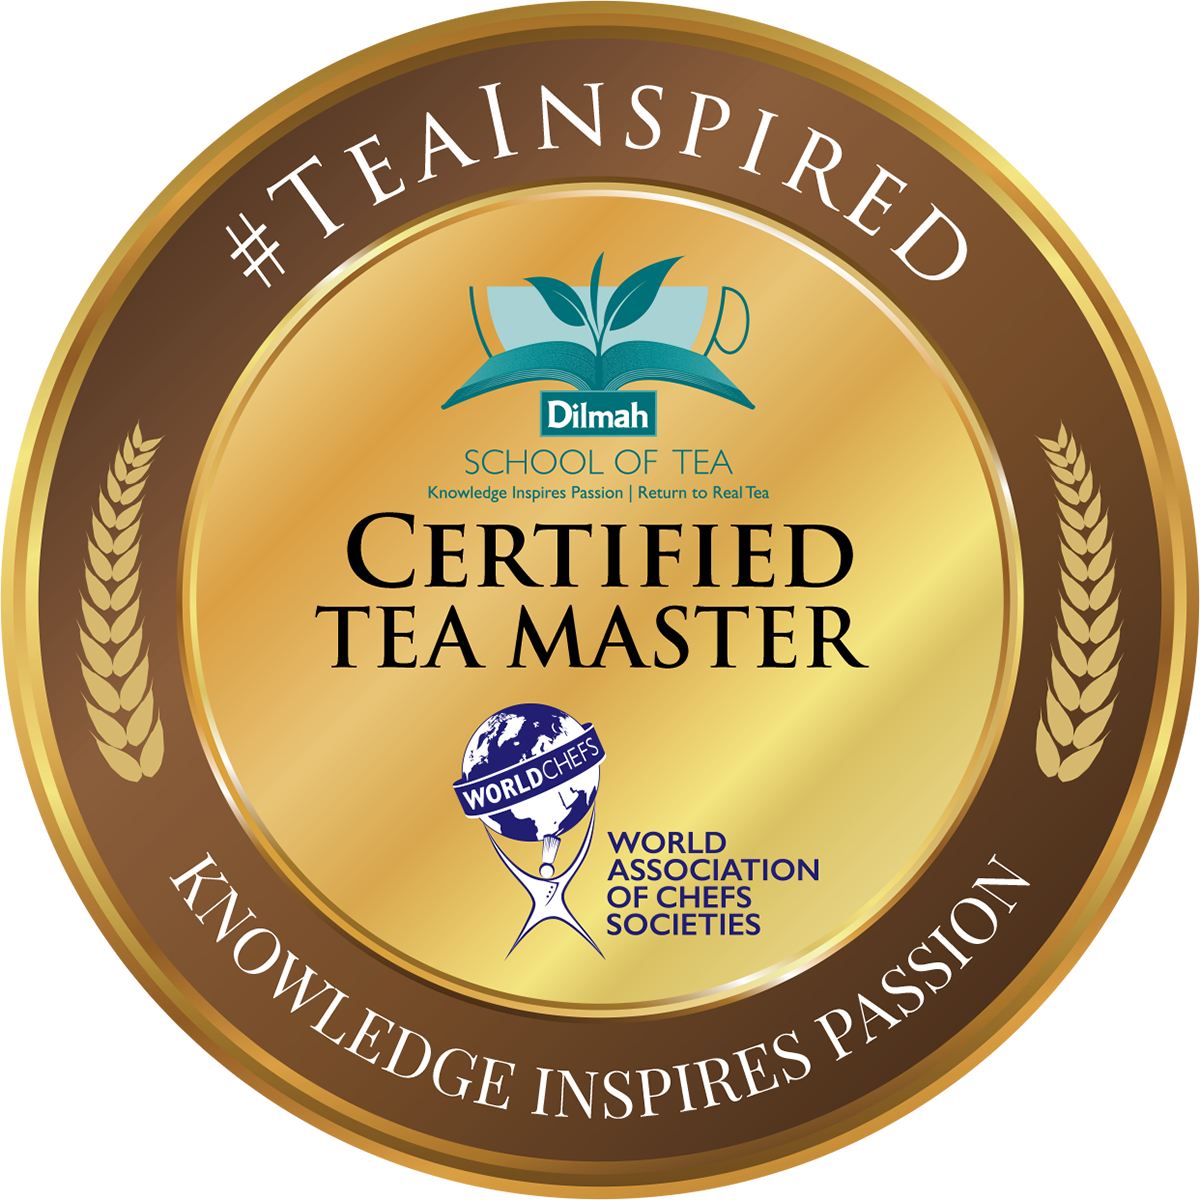 Dilmah Certified Tea Master Certificate